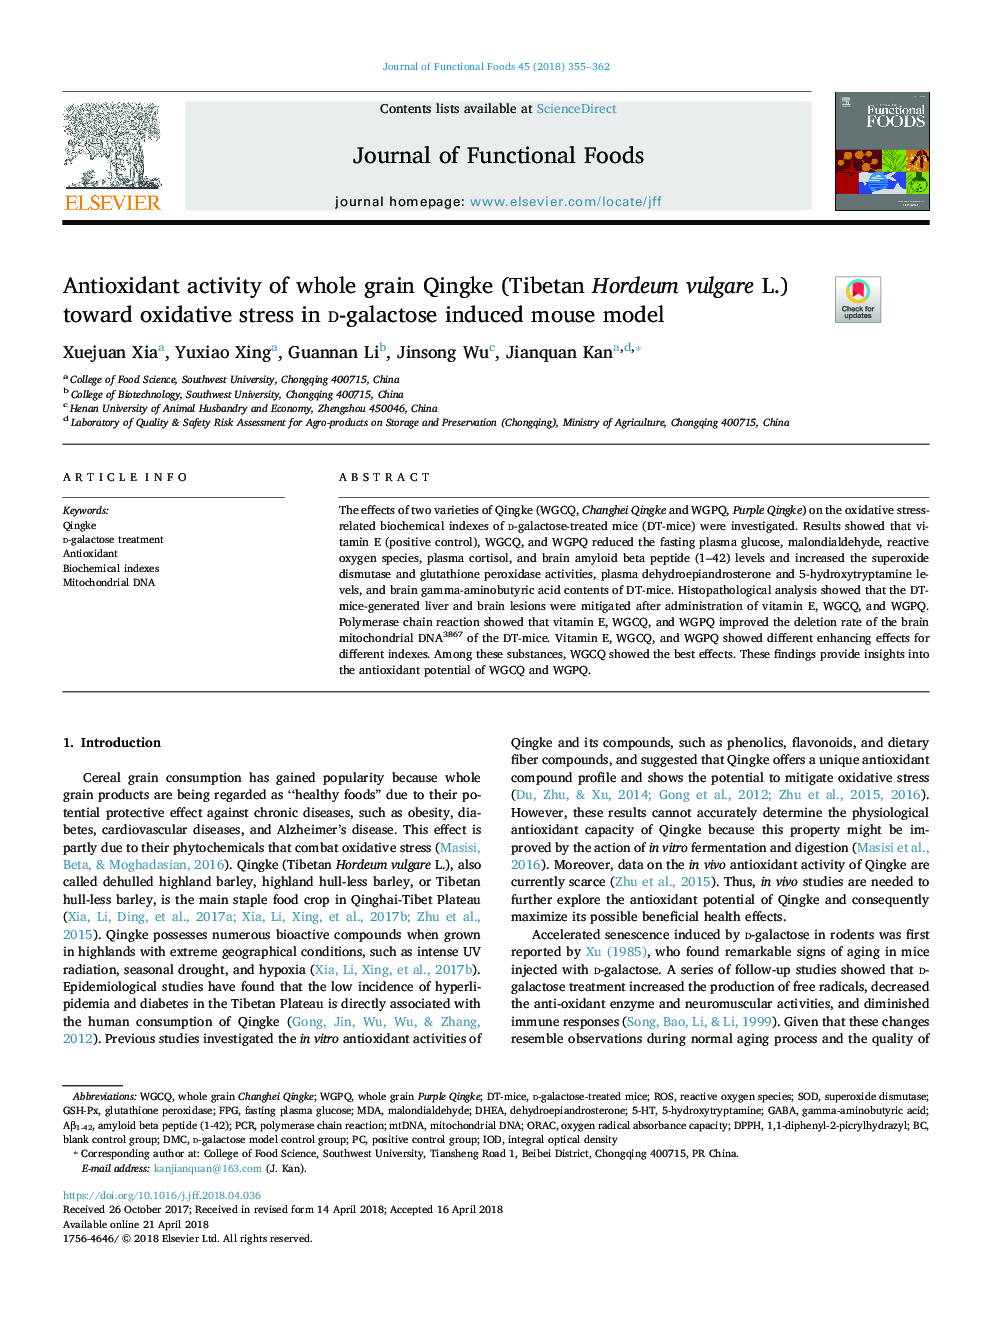 Antioxidant activity of whole grain Qingke (Tibetan Hordeum vulgare L.) toward oxidative stress in d-galactose induced mouse model